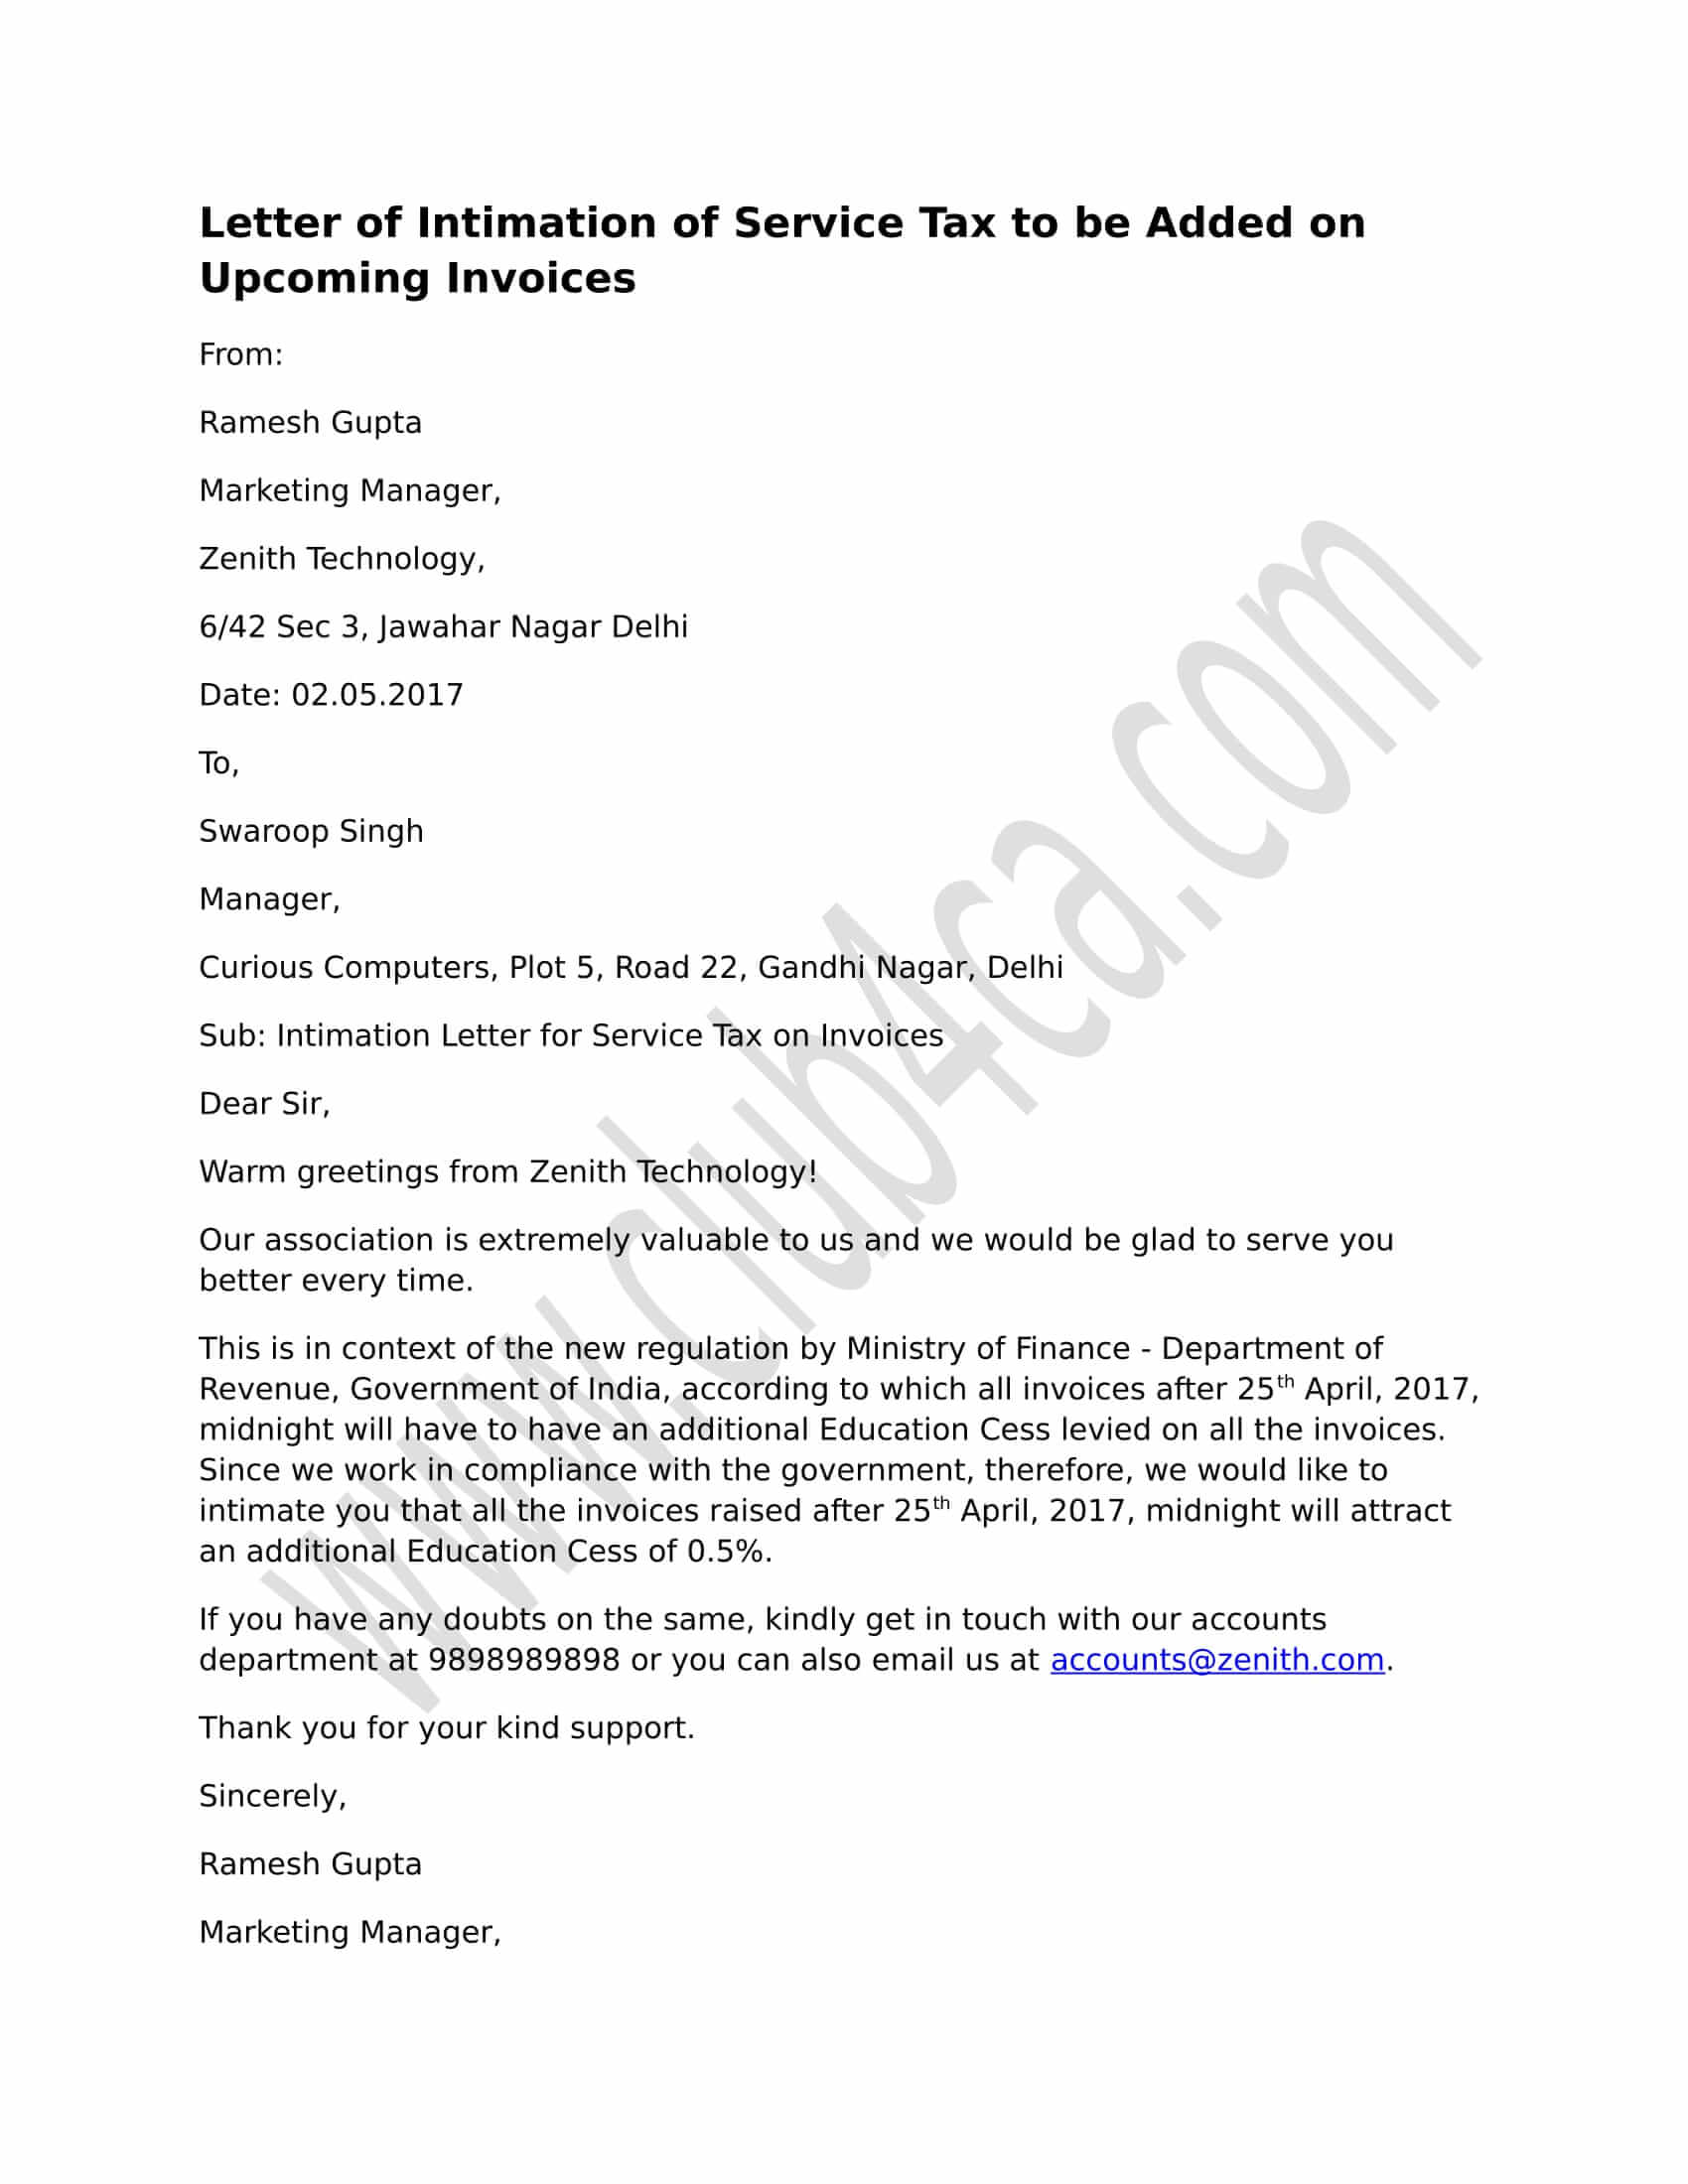 vat application letter template